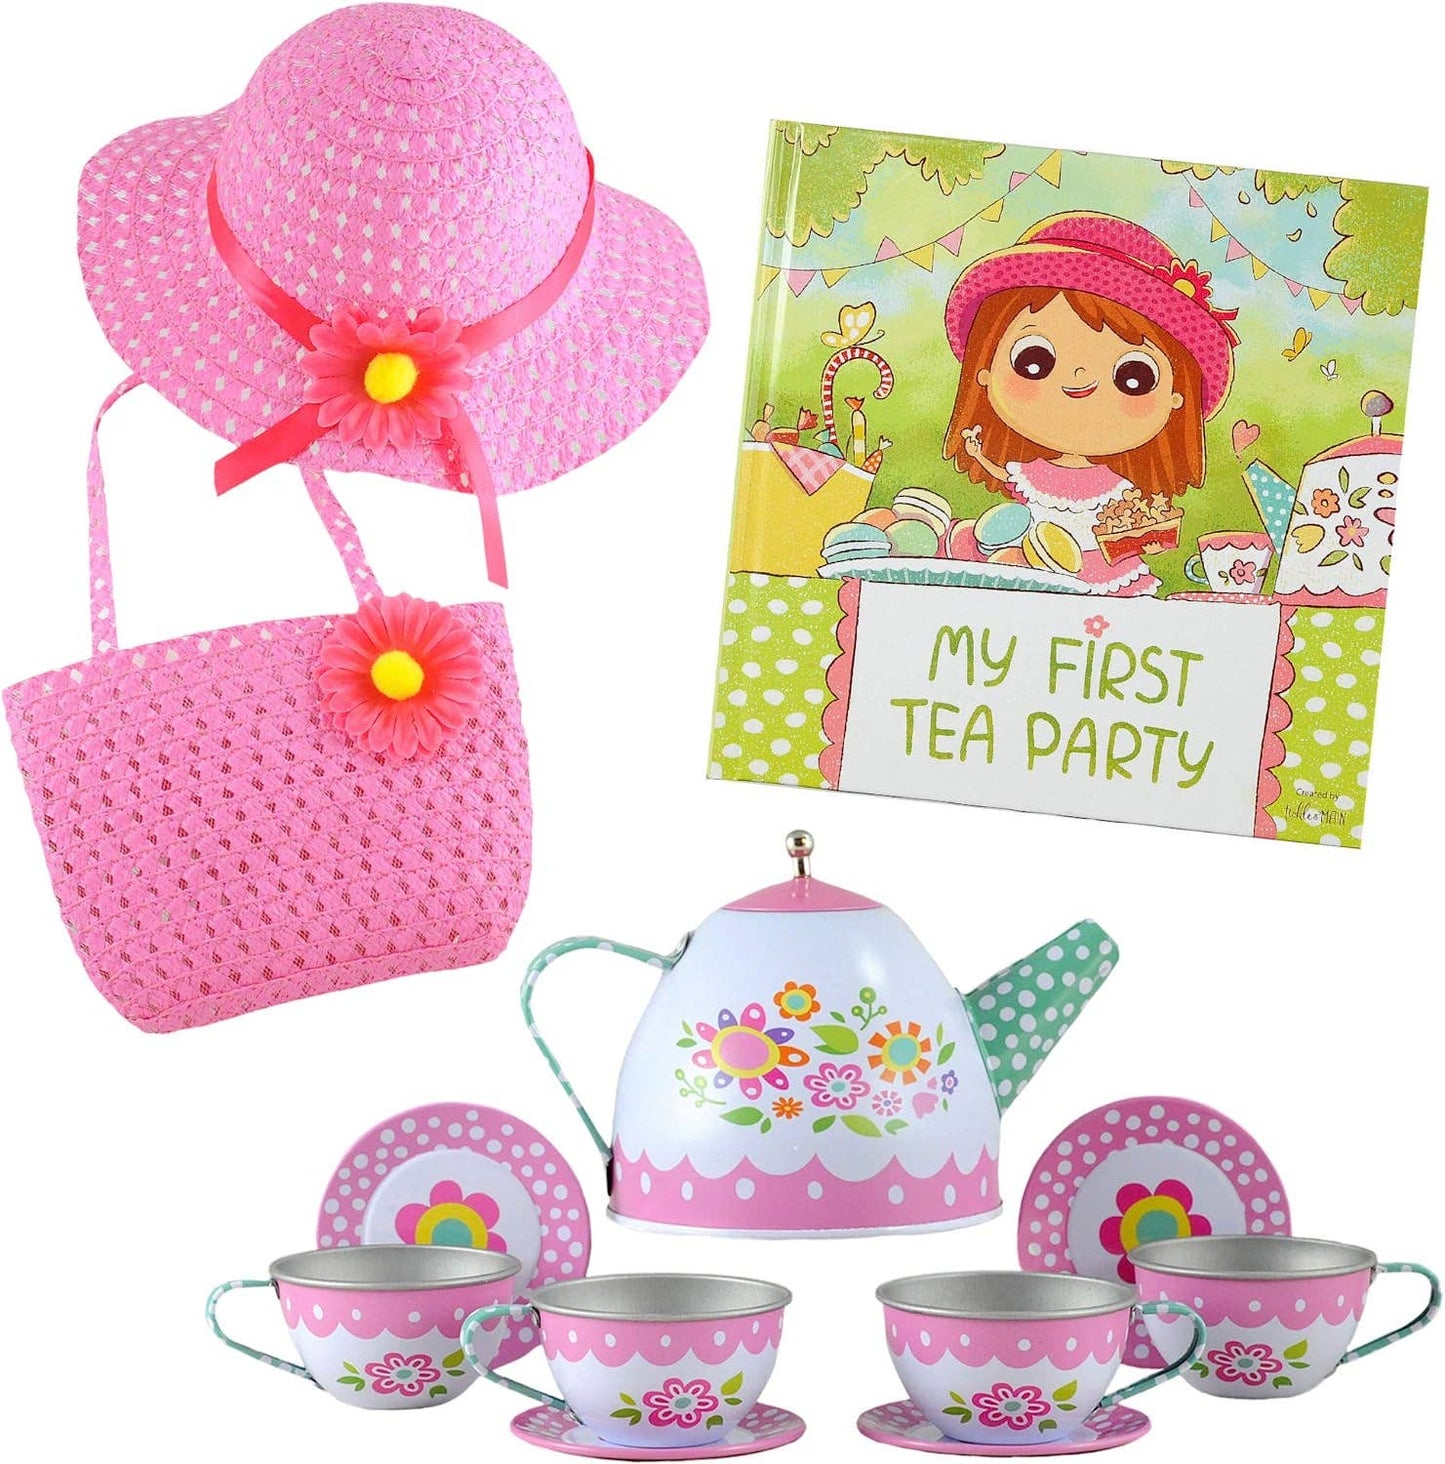 My First Tea Party Gift Set w/ Book, Tea Set, Hat & Purse